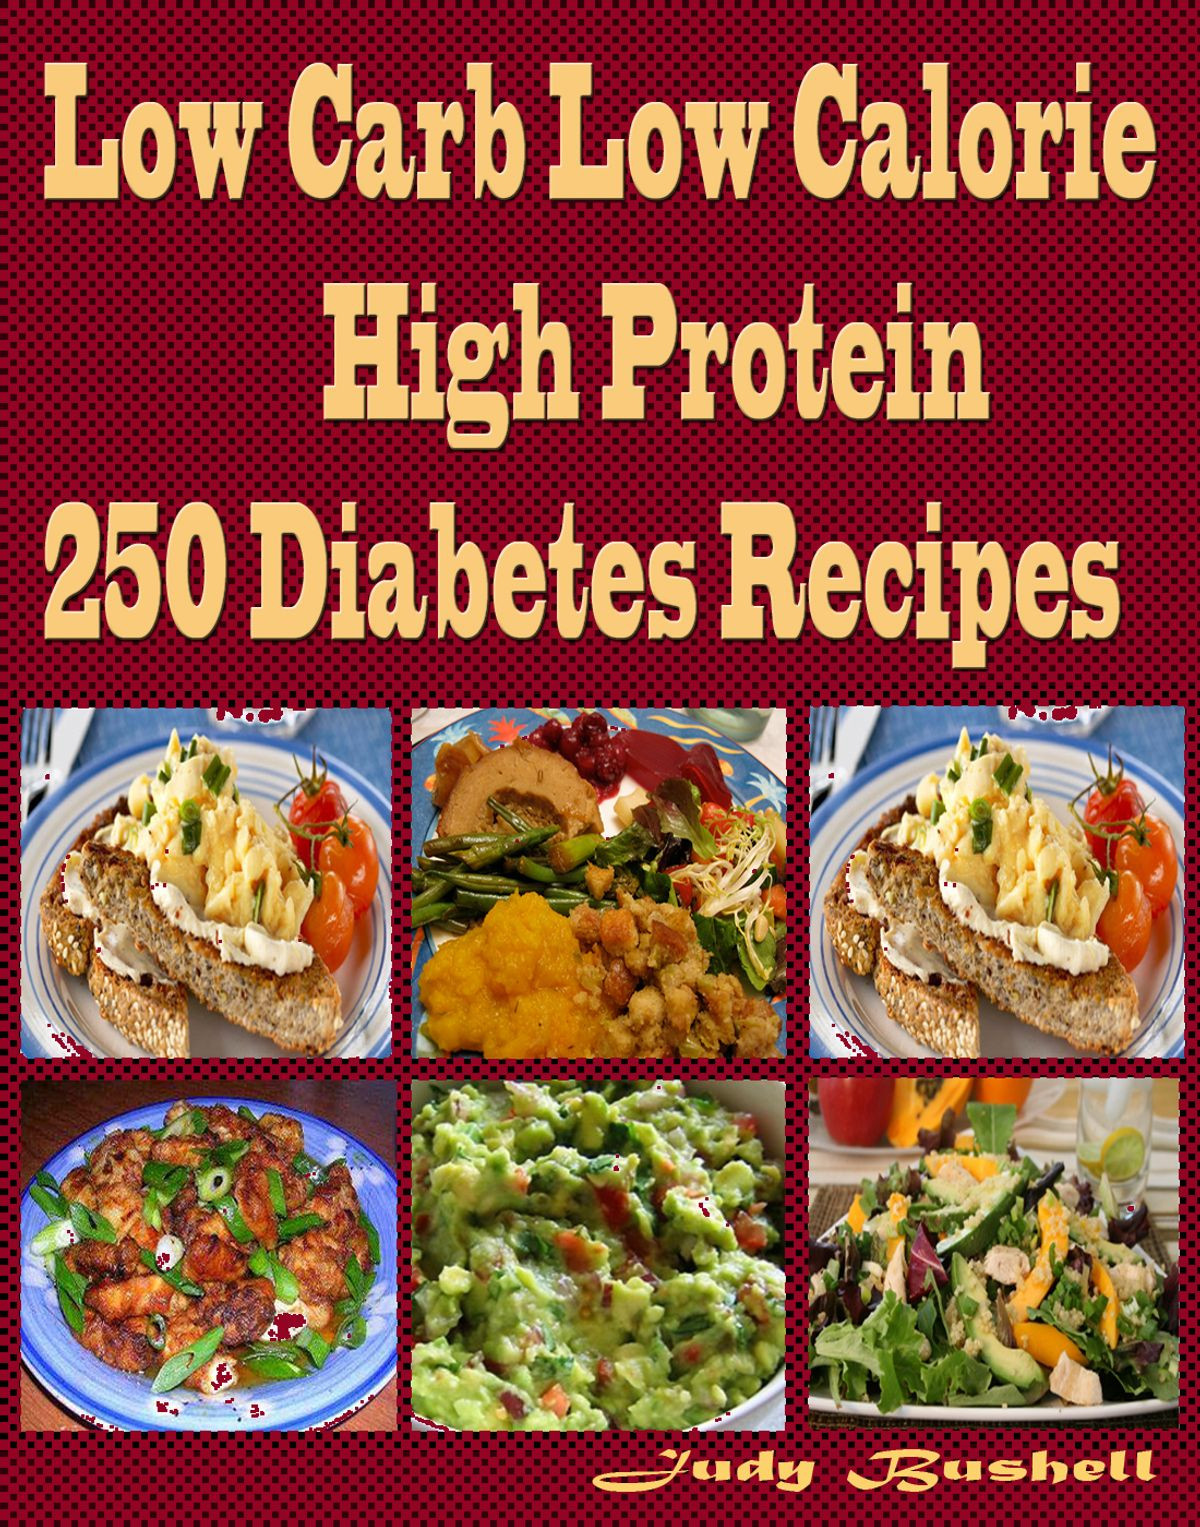 Low Calorie Low Carb Recipes
 Low Carb Low Calorie High Protein 250 Diabetes Recipes